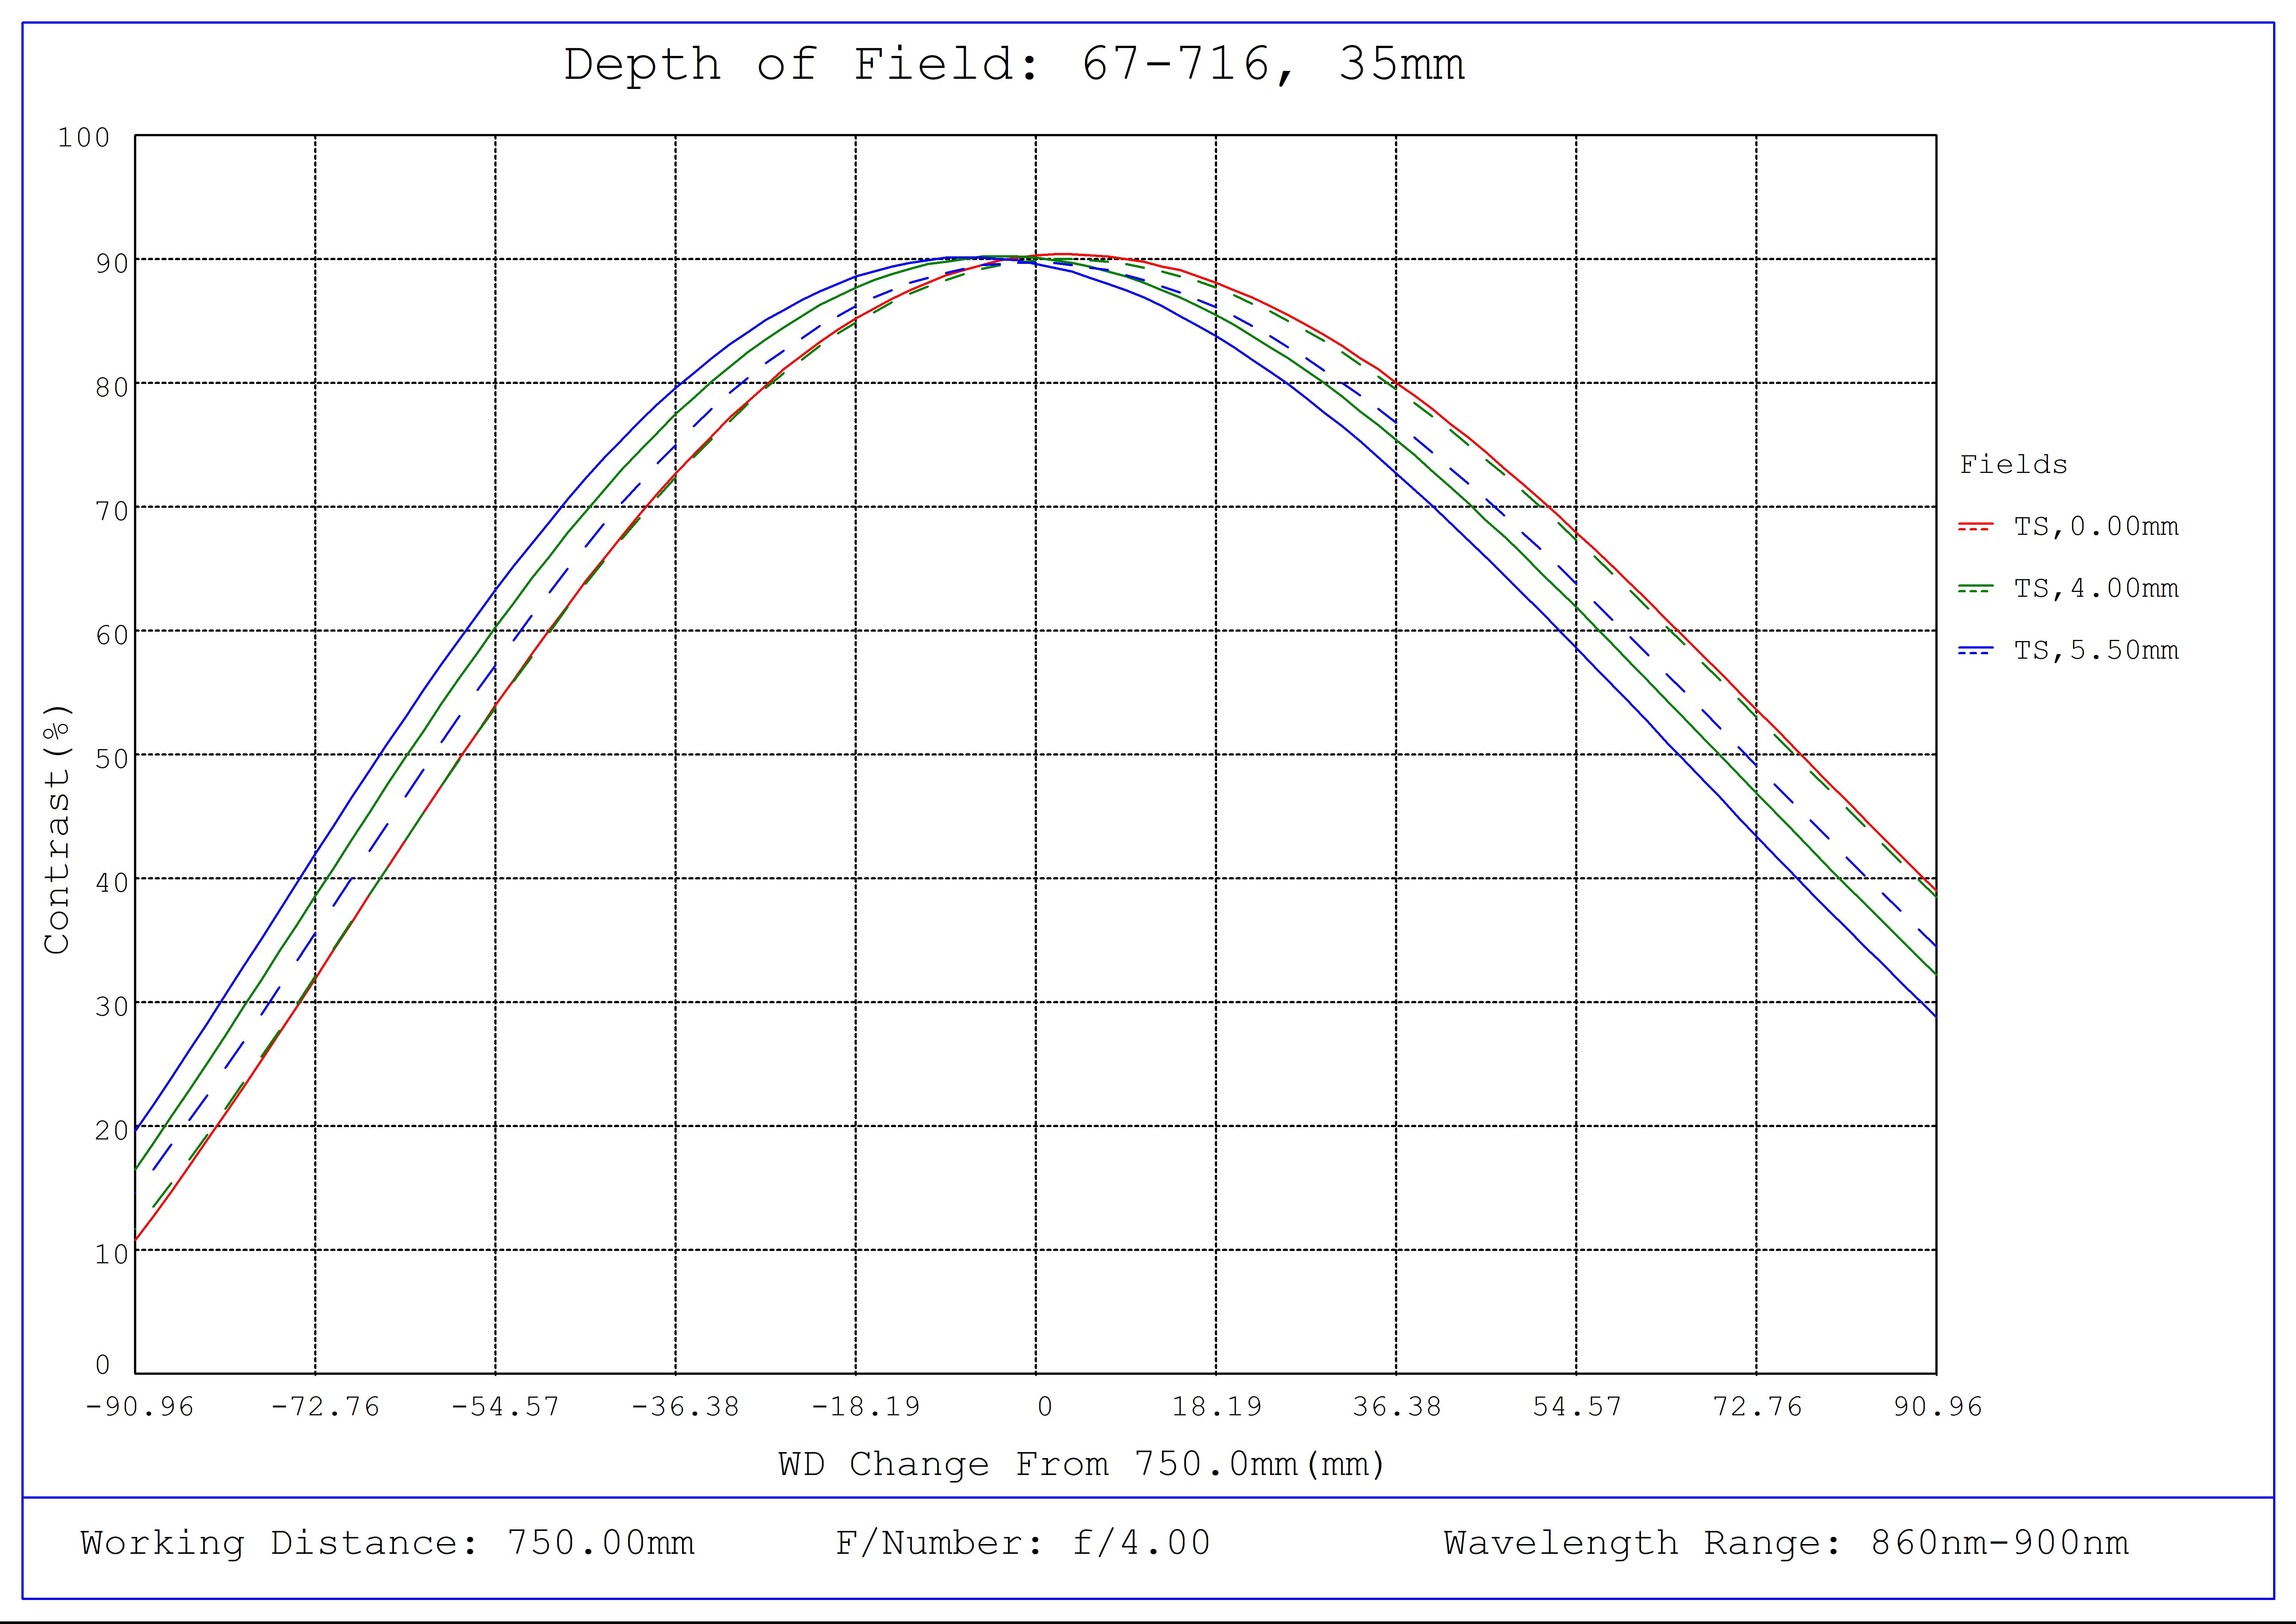 #67-716, 35mm C VIS-NIR Series Fixed Focal Length Lens, Depth of Field Plot (NIR), 750mm Working Distance, f4